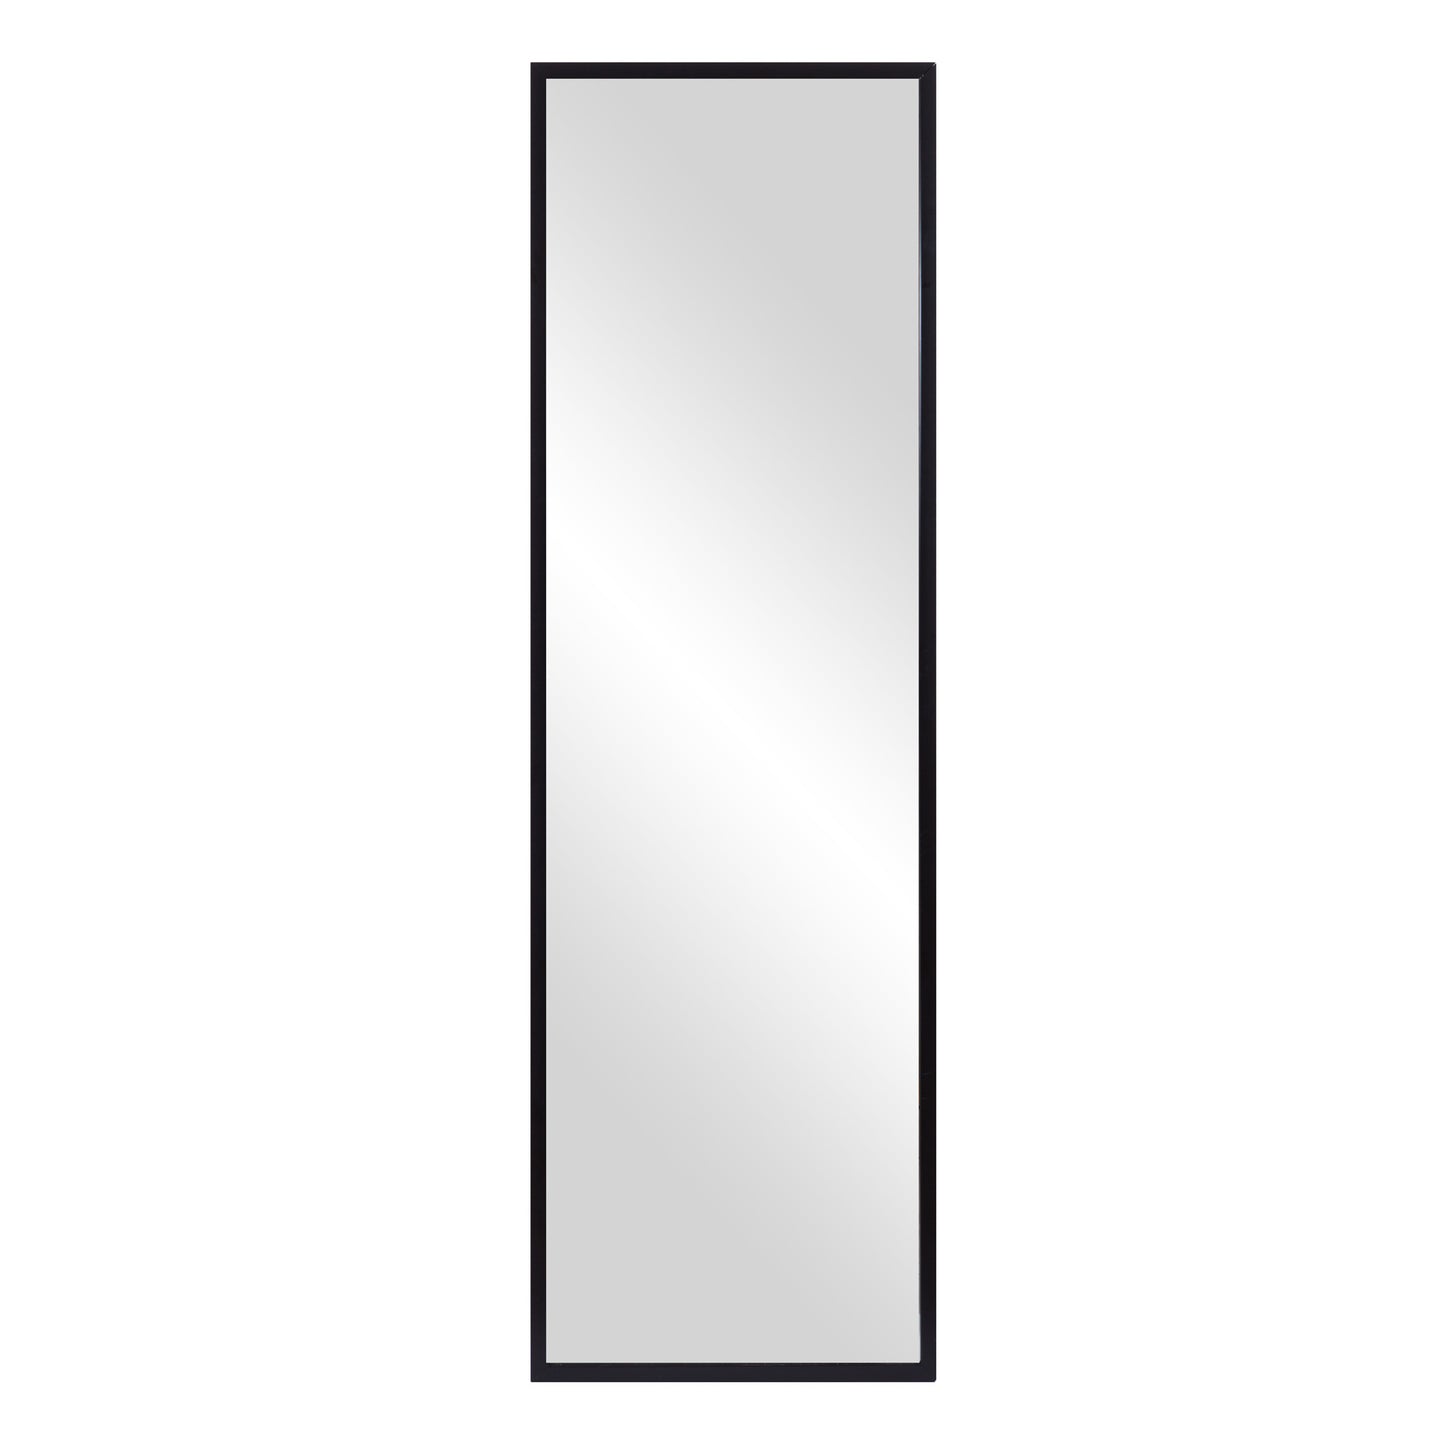 My Vanity Mirror™ Standing Mirror